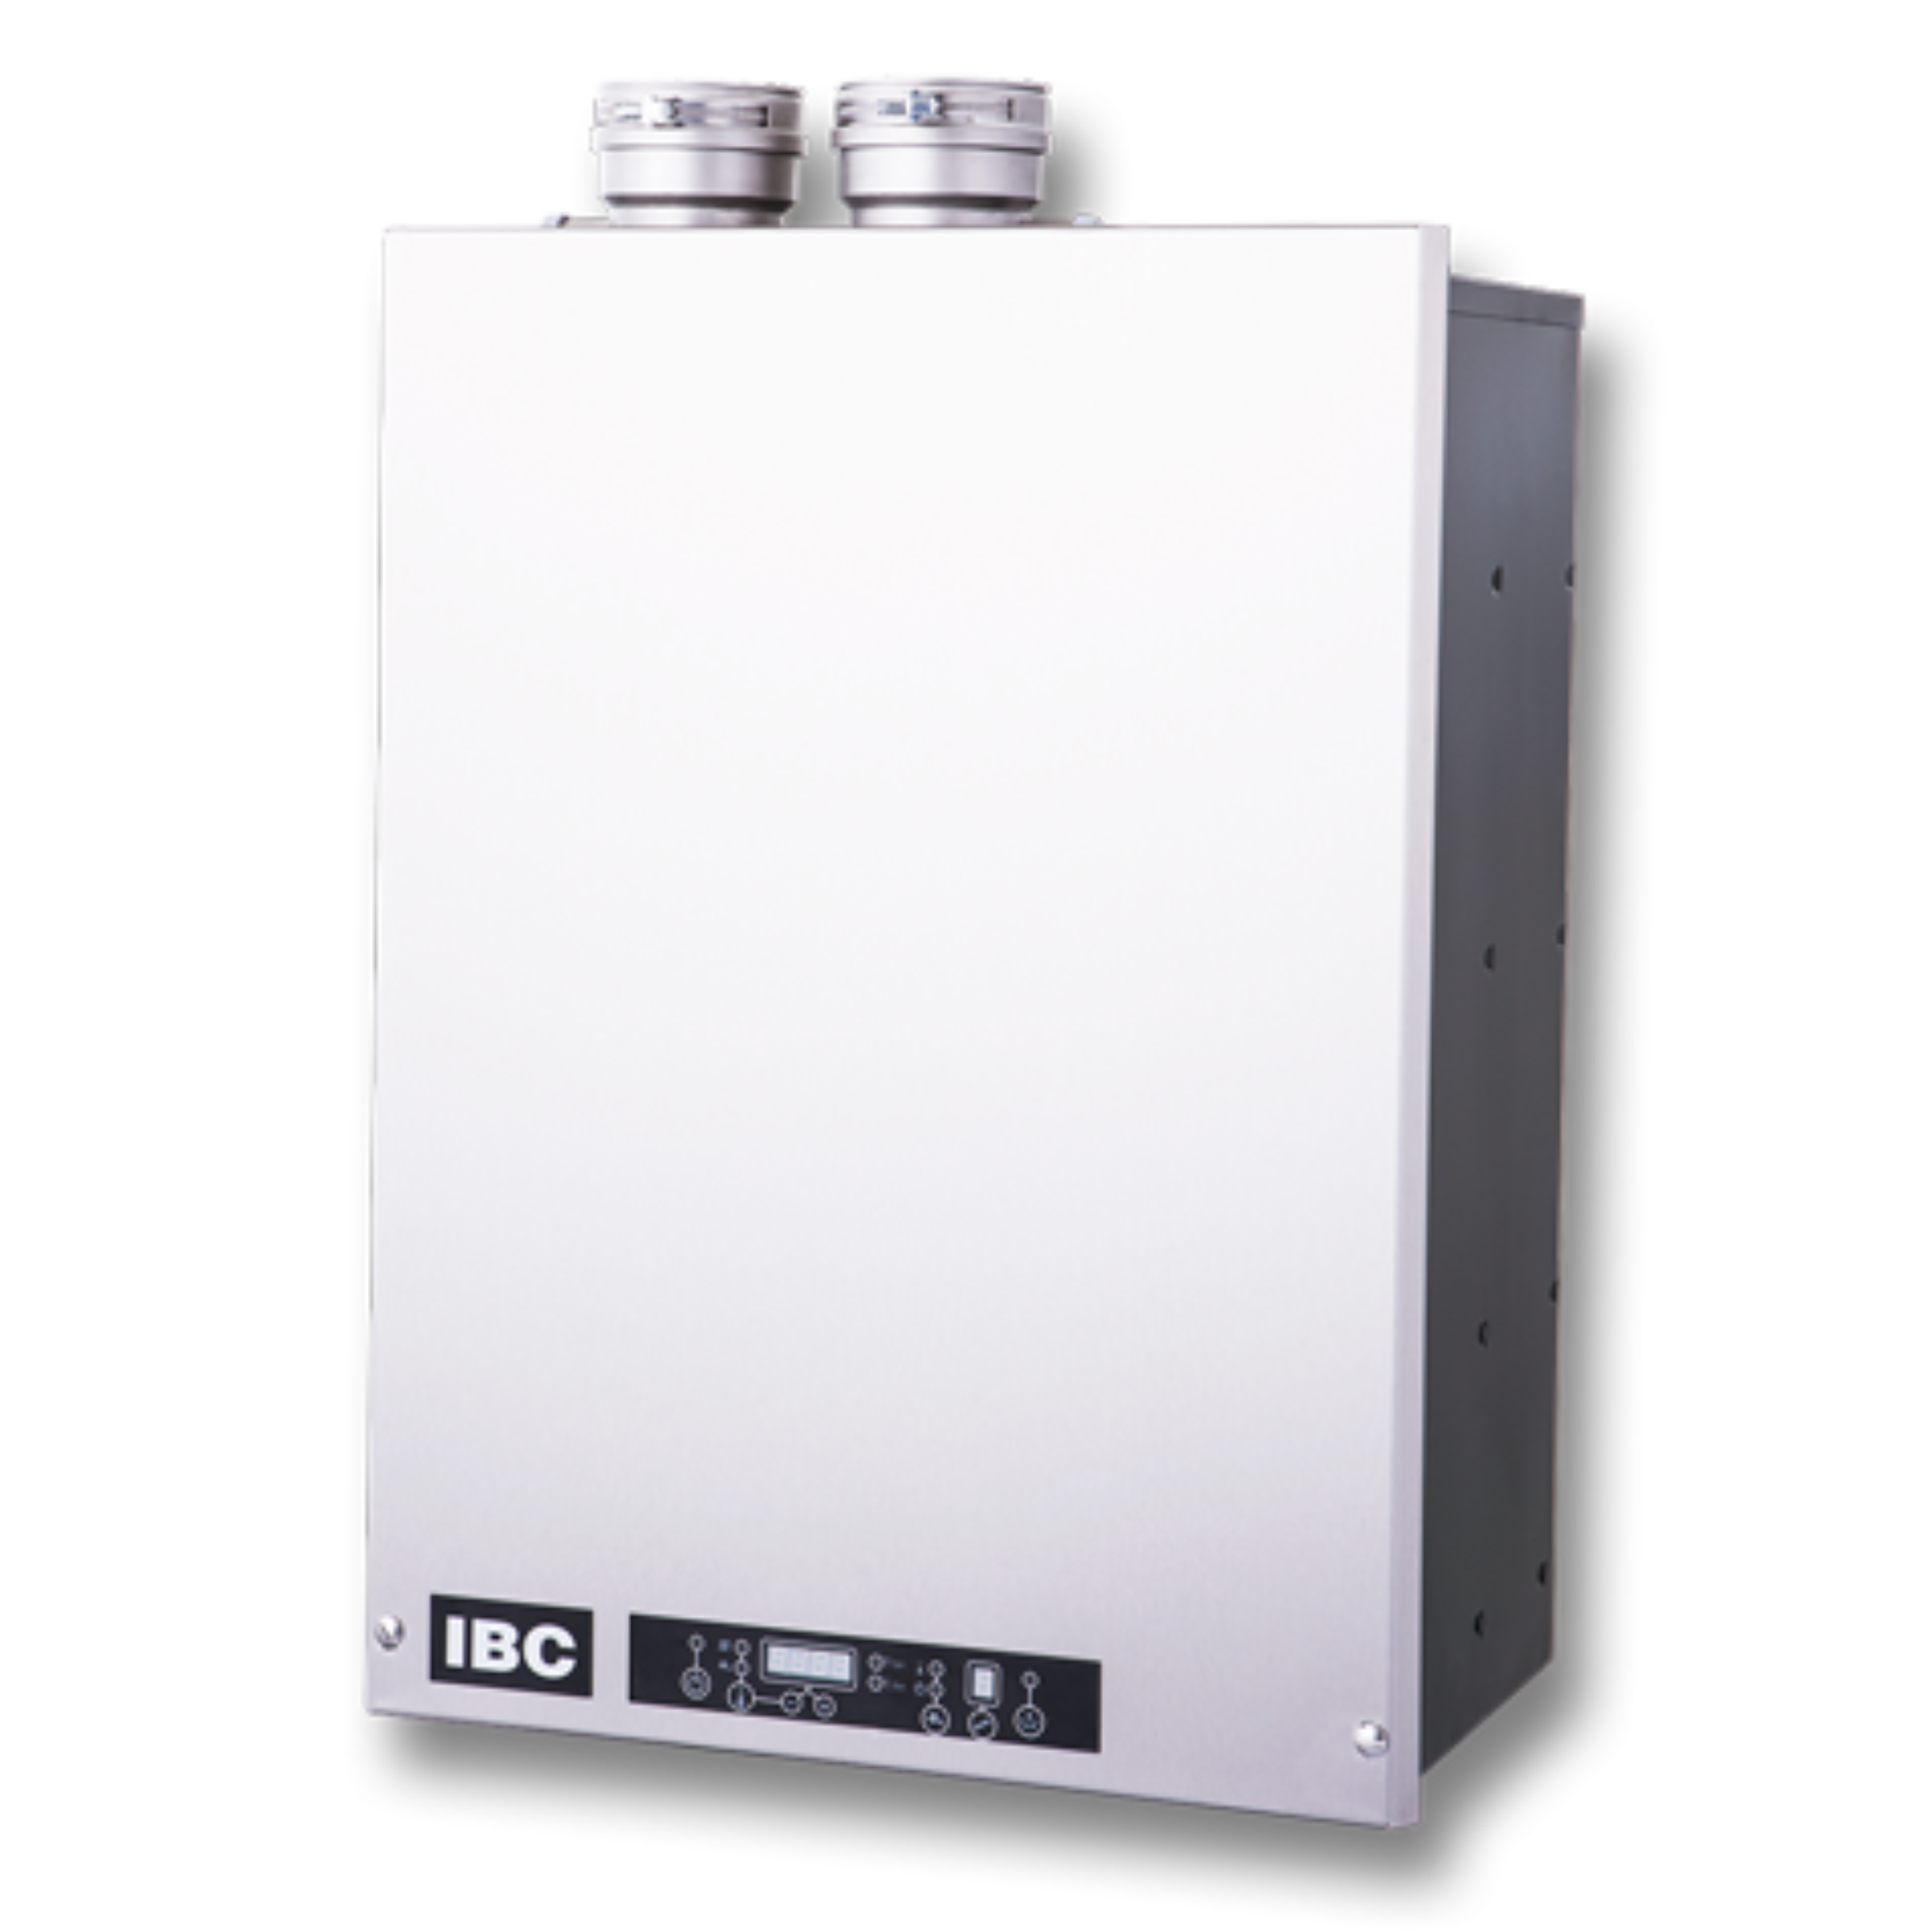 HC 20-125 IBC HC Series High Efficiency Condensing Boiler 20,000-125,000 BTU Natural Gas, 95% AFUE, Energy Star Qualified